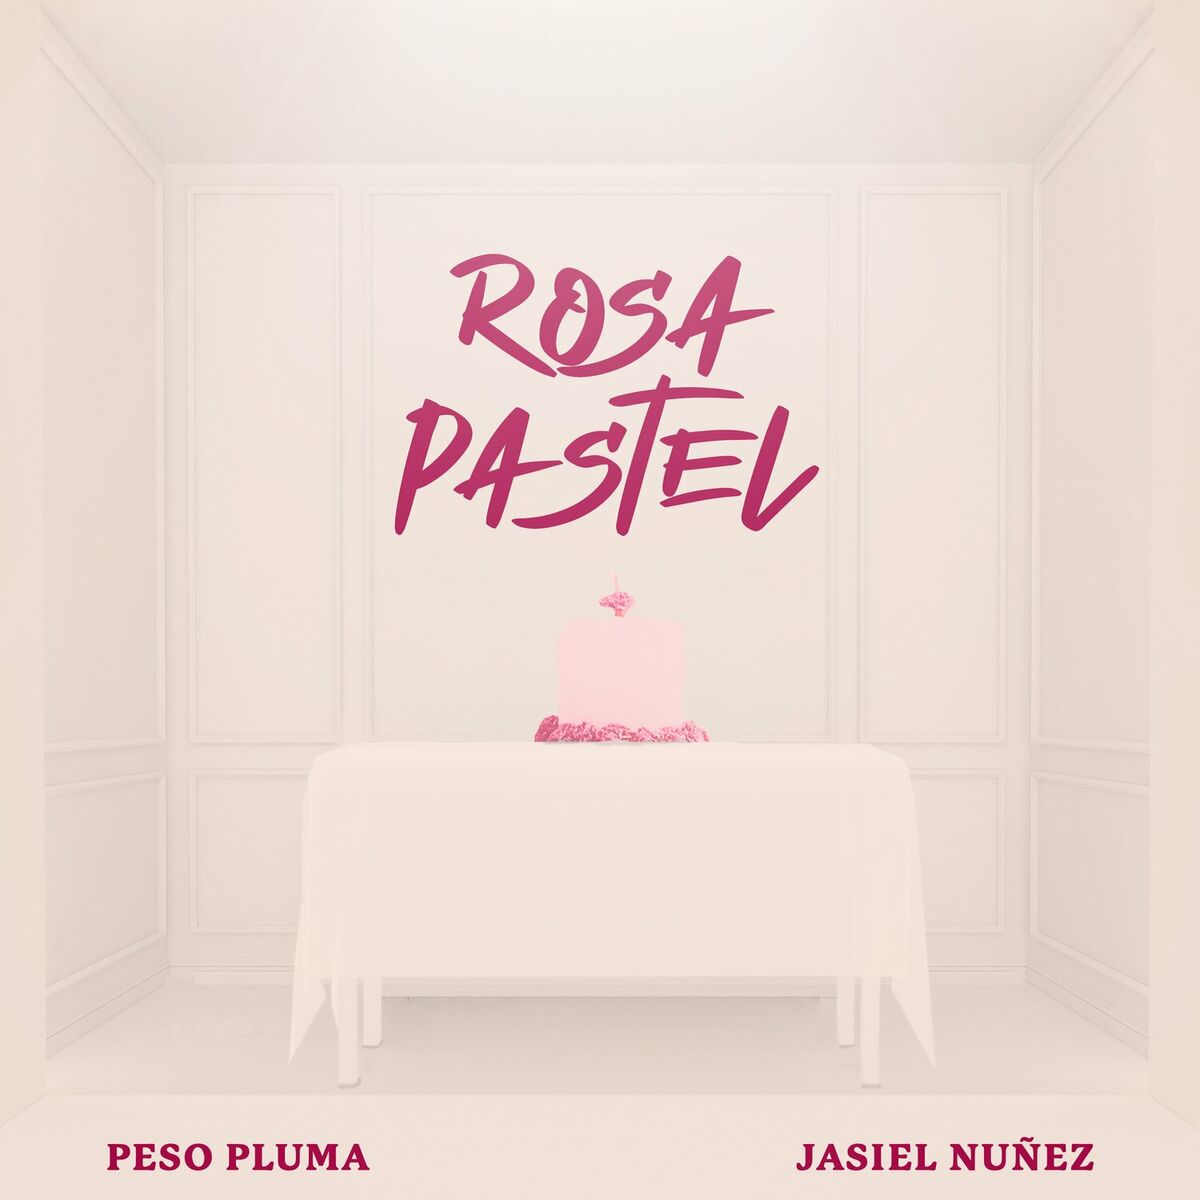 Rosa Pastel: Peso Pluma, Jasiel Nunez – Rosa Pastel